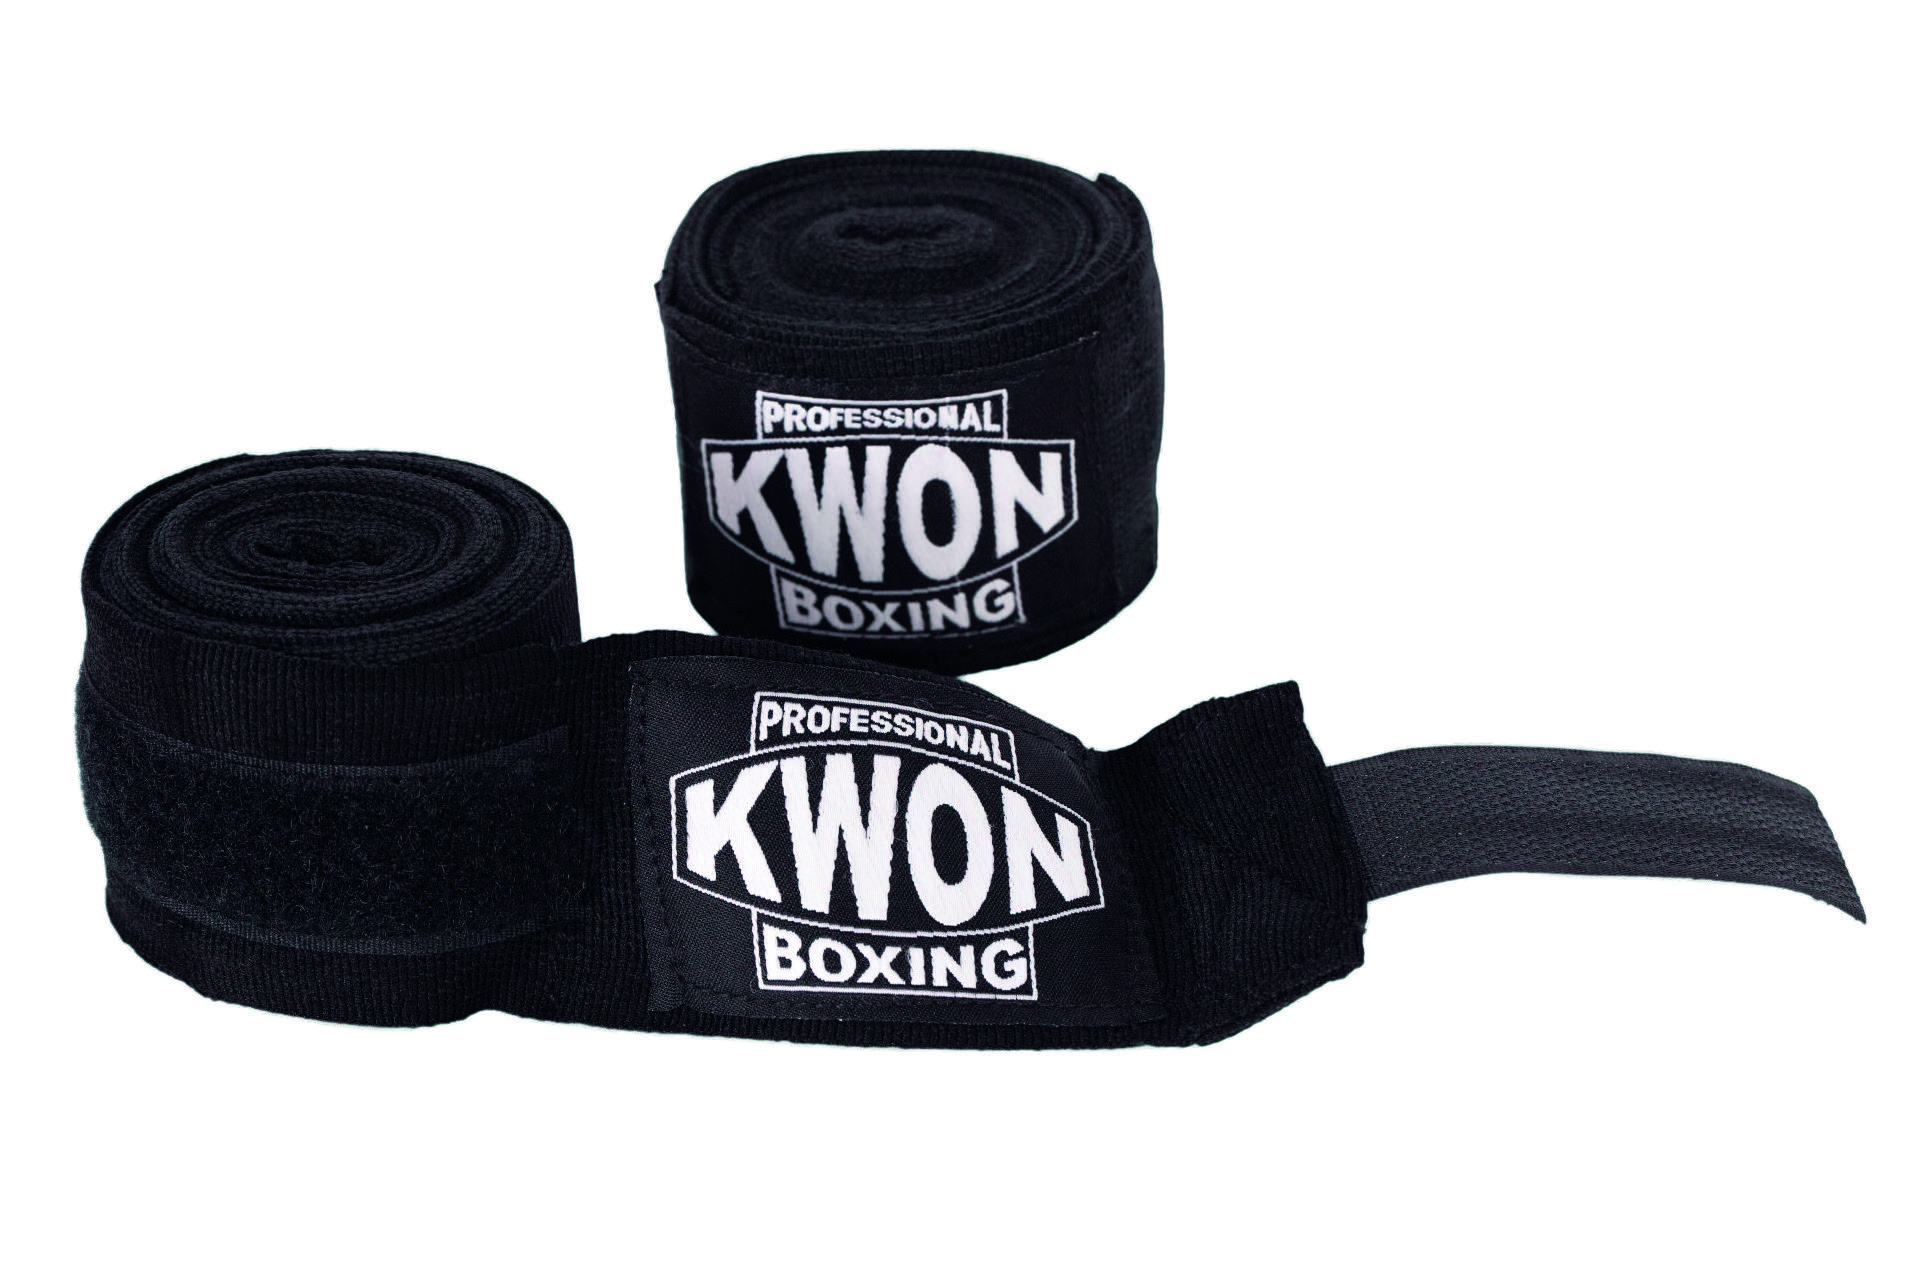 Boxbanadagen von KWON Professional Boxing